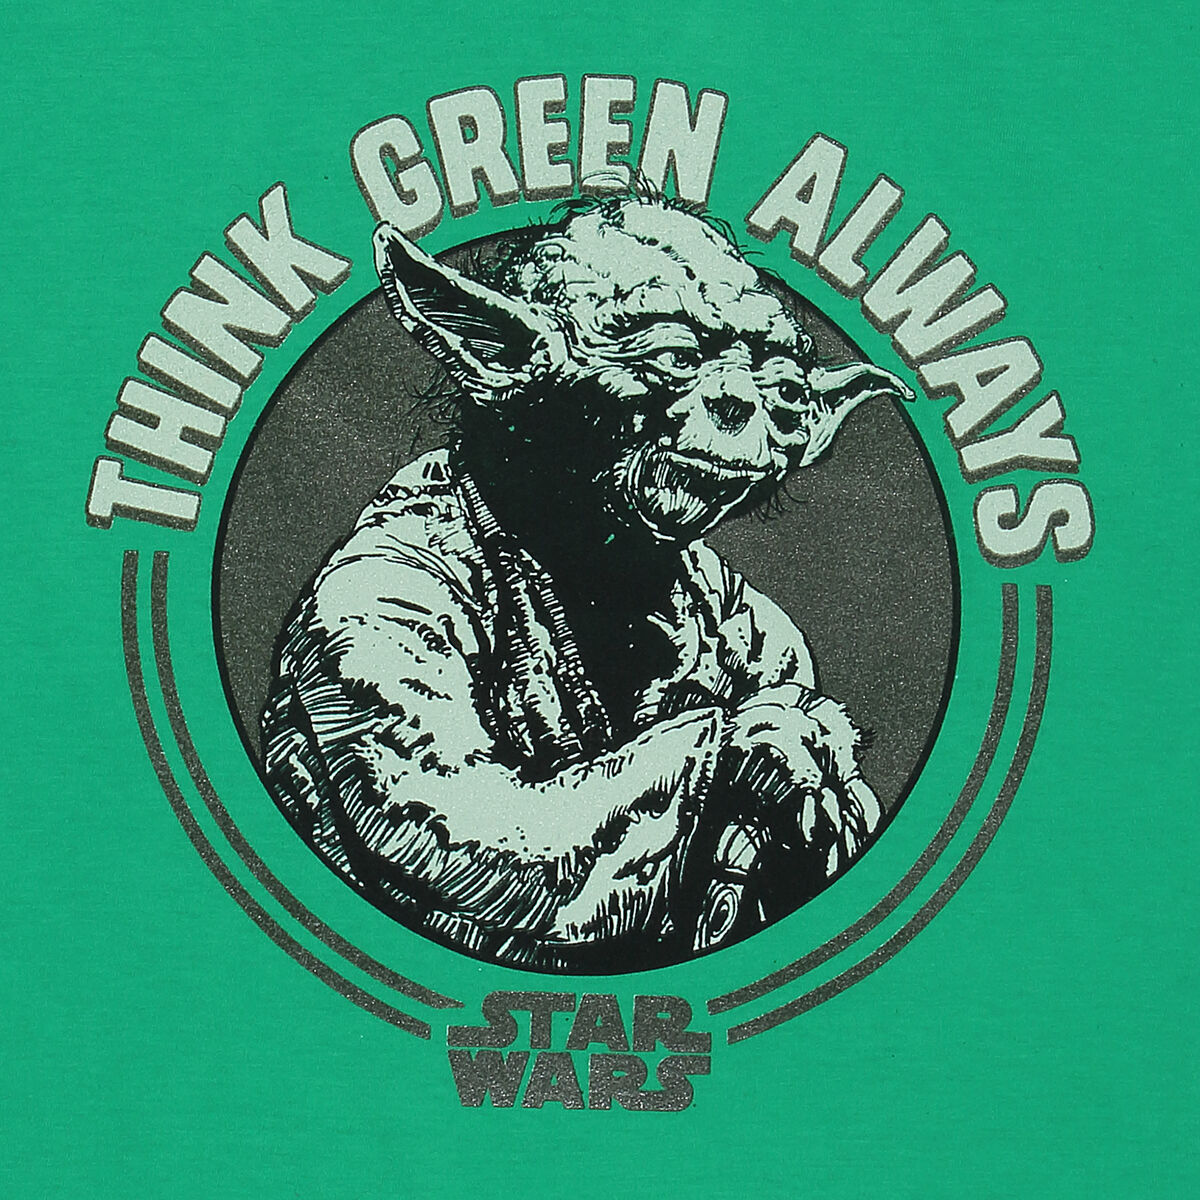 Camiseta De Manga Corta Star Wars Yoda Think Green - Camiseta De Manga Corta  MKP